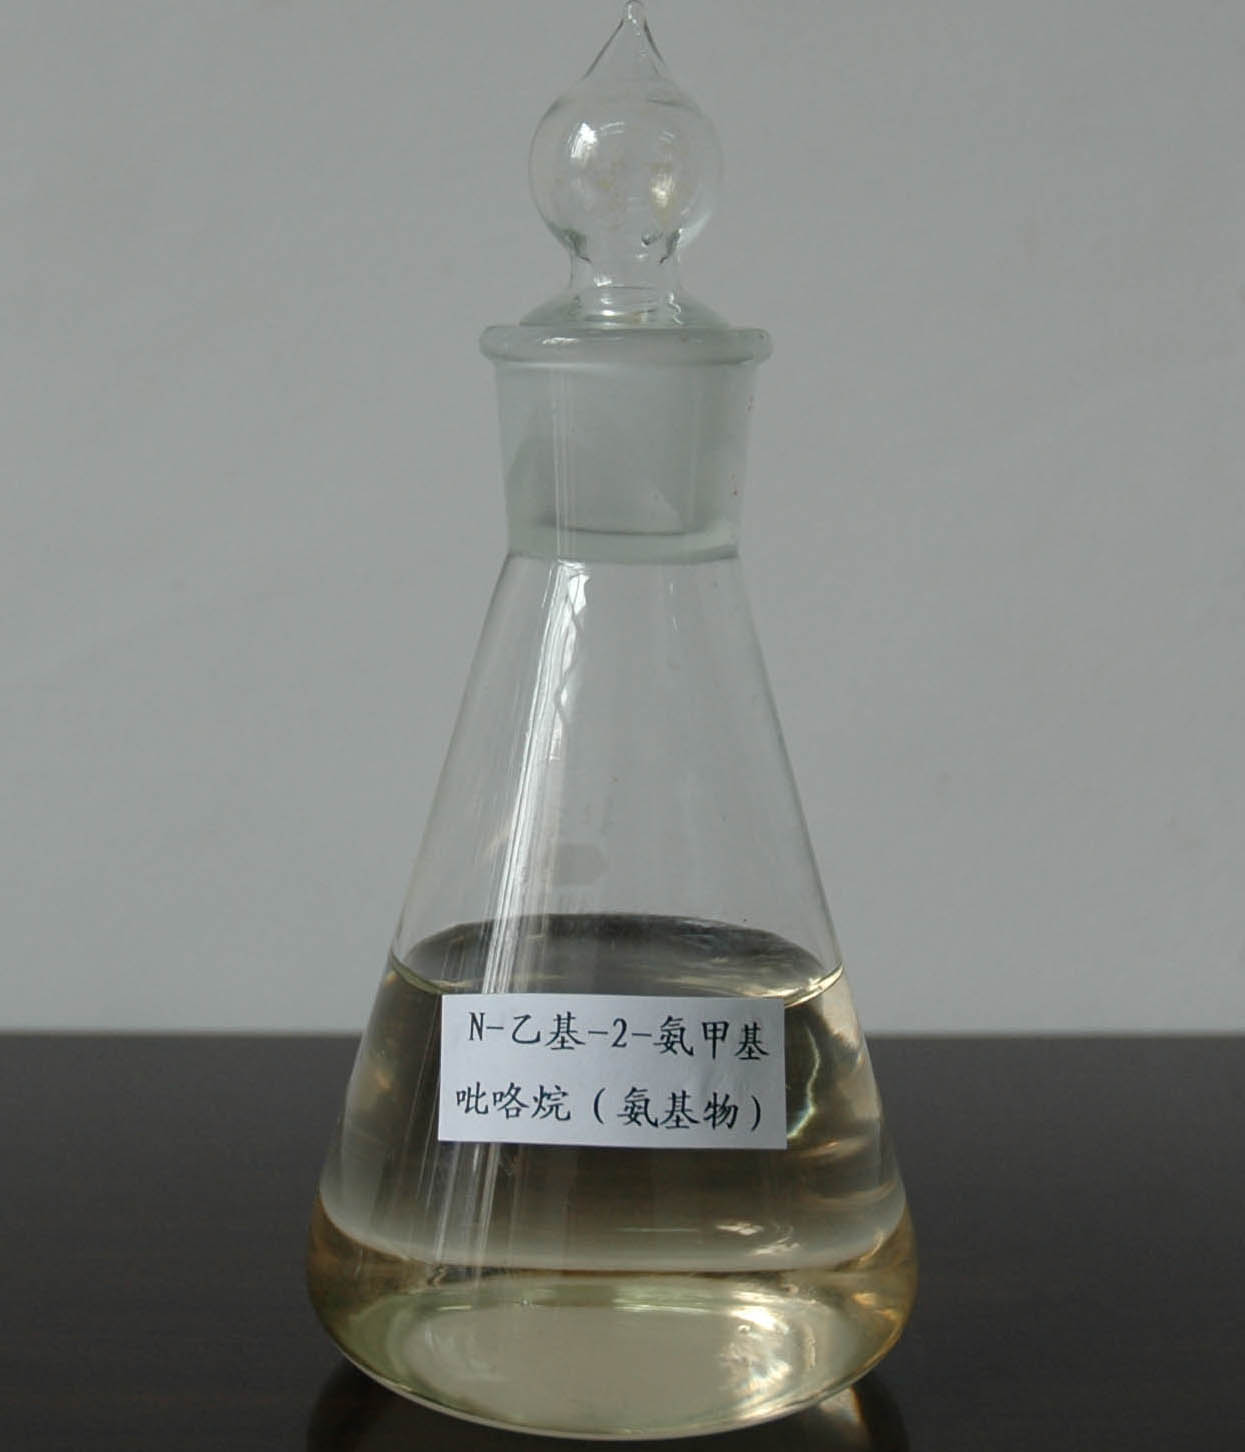  N-Ethyl-2-Aminomethyl Pirrolidine (N-Ethyl-2-Aminomethyl Pirrolidine)